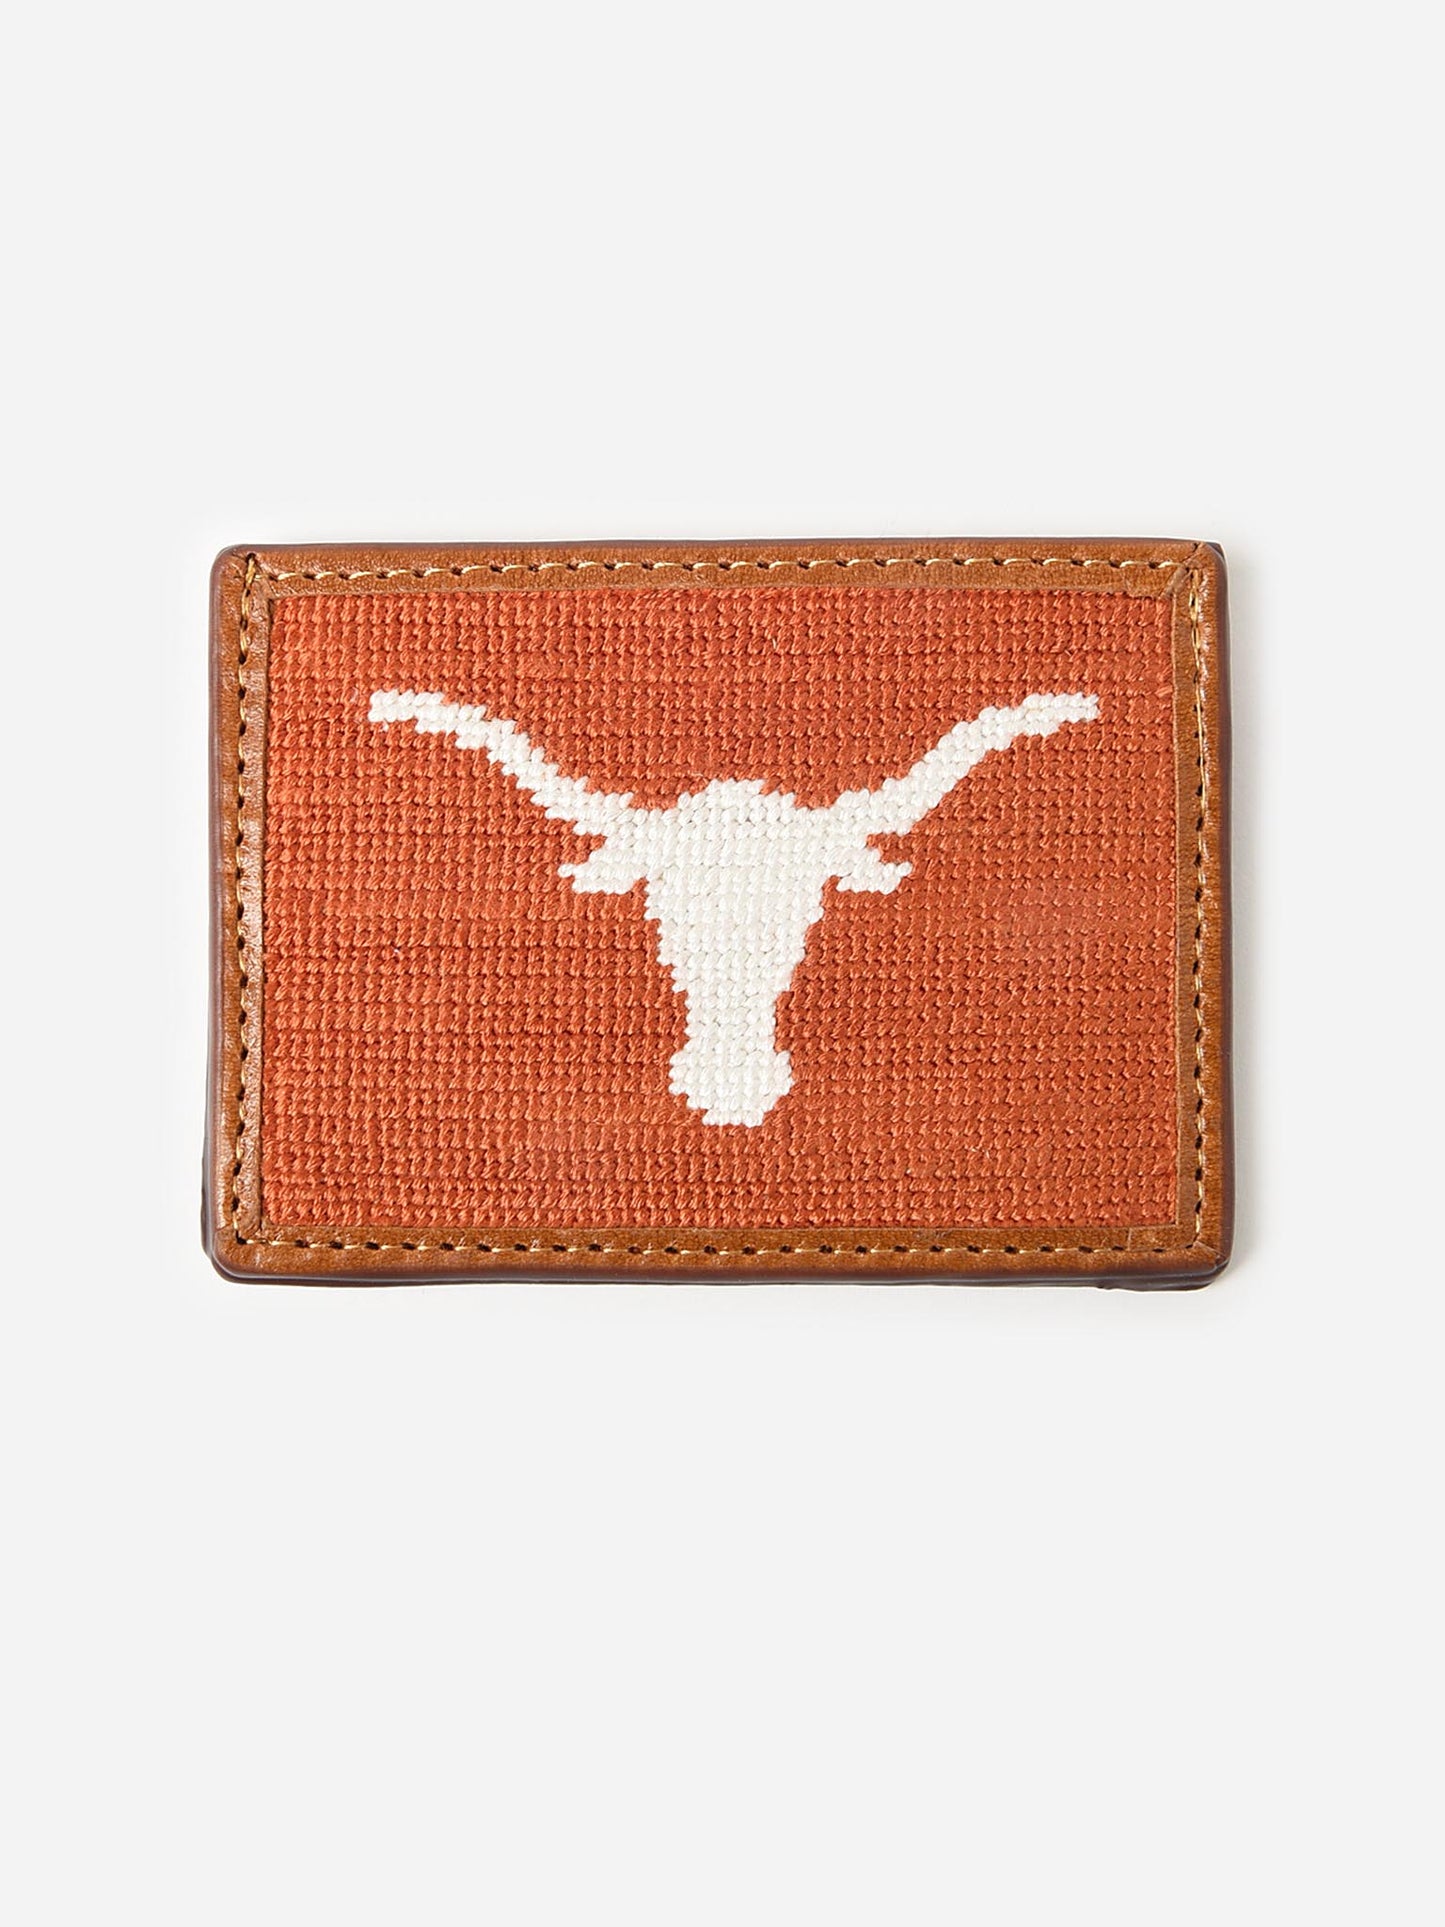 Smathers + Branson University of Texas Needlepoint Card Wallet